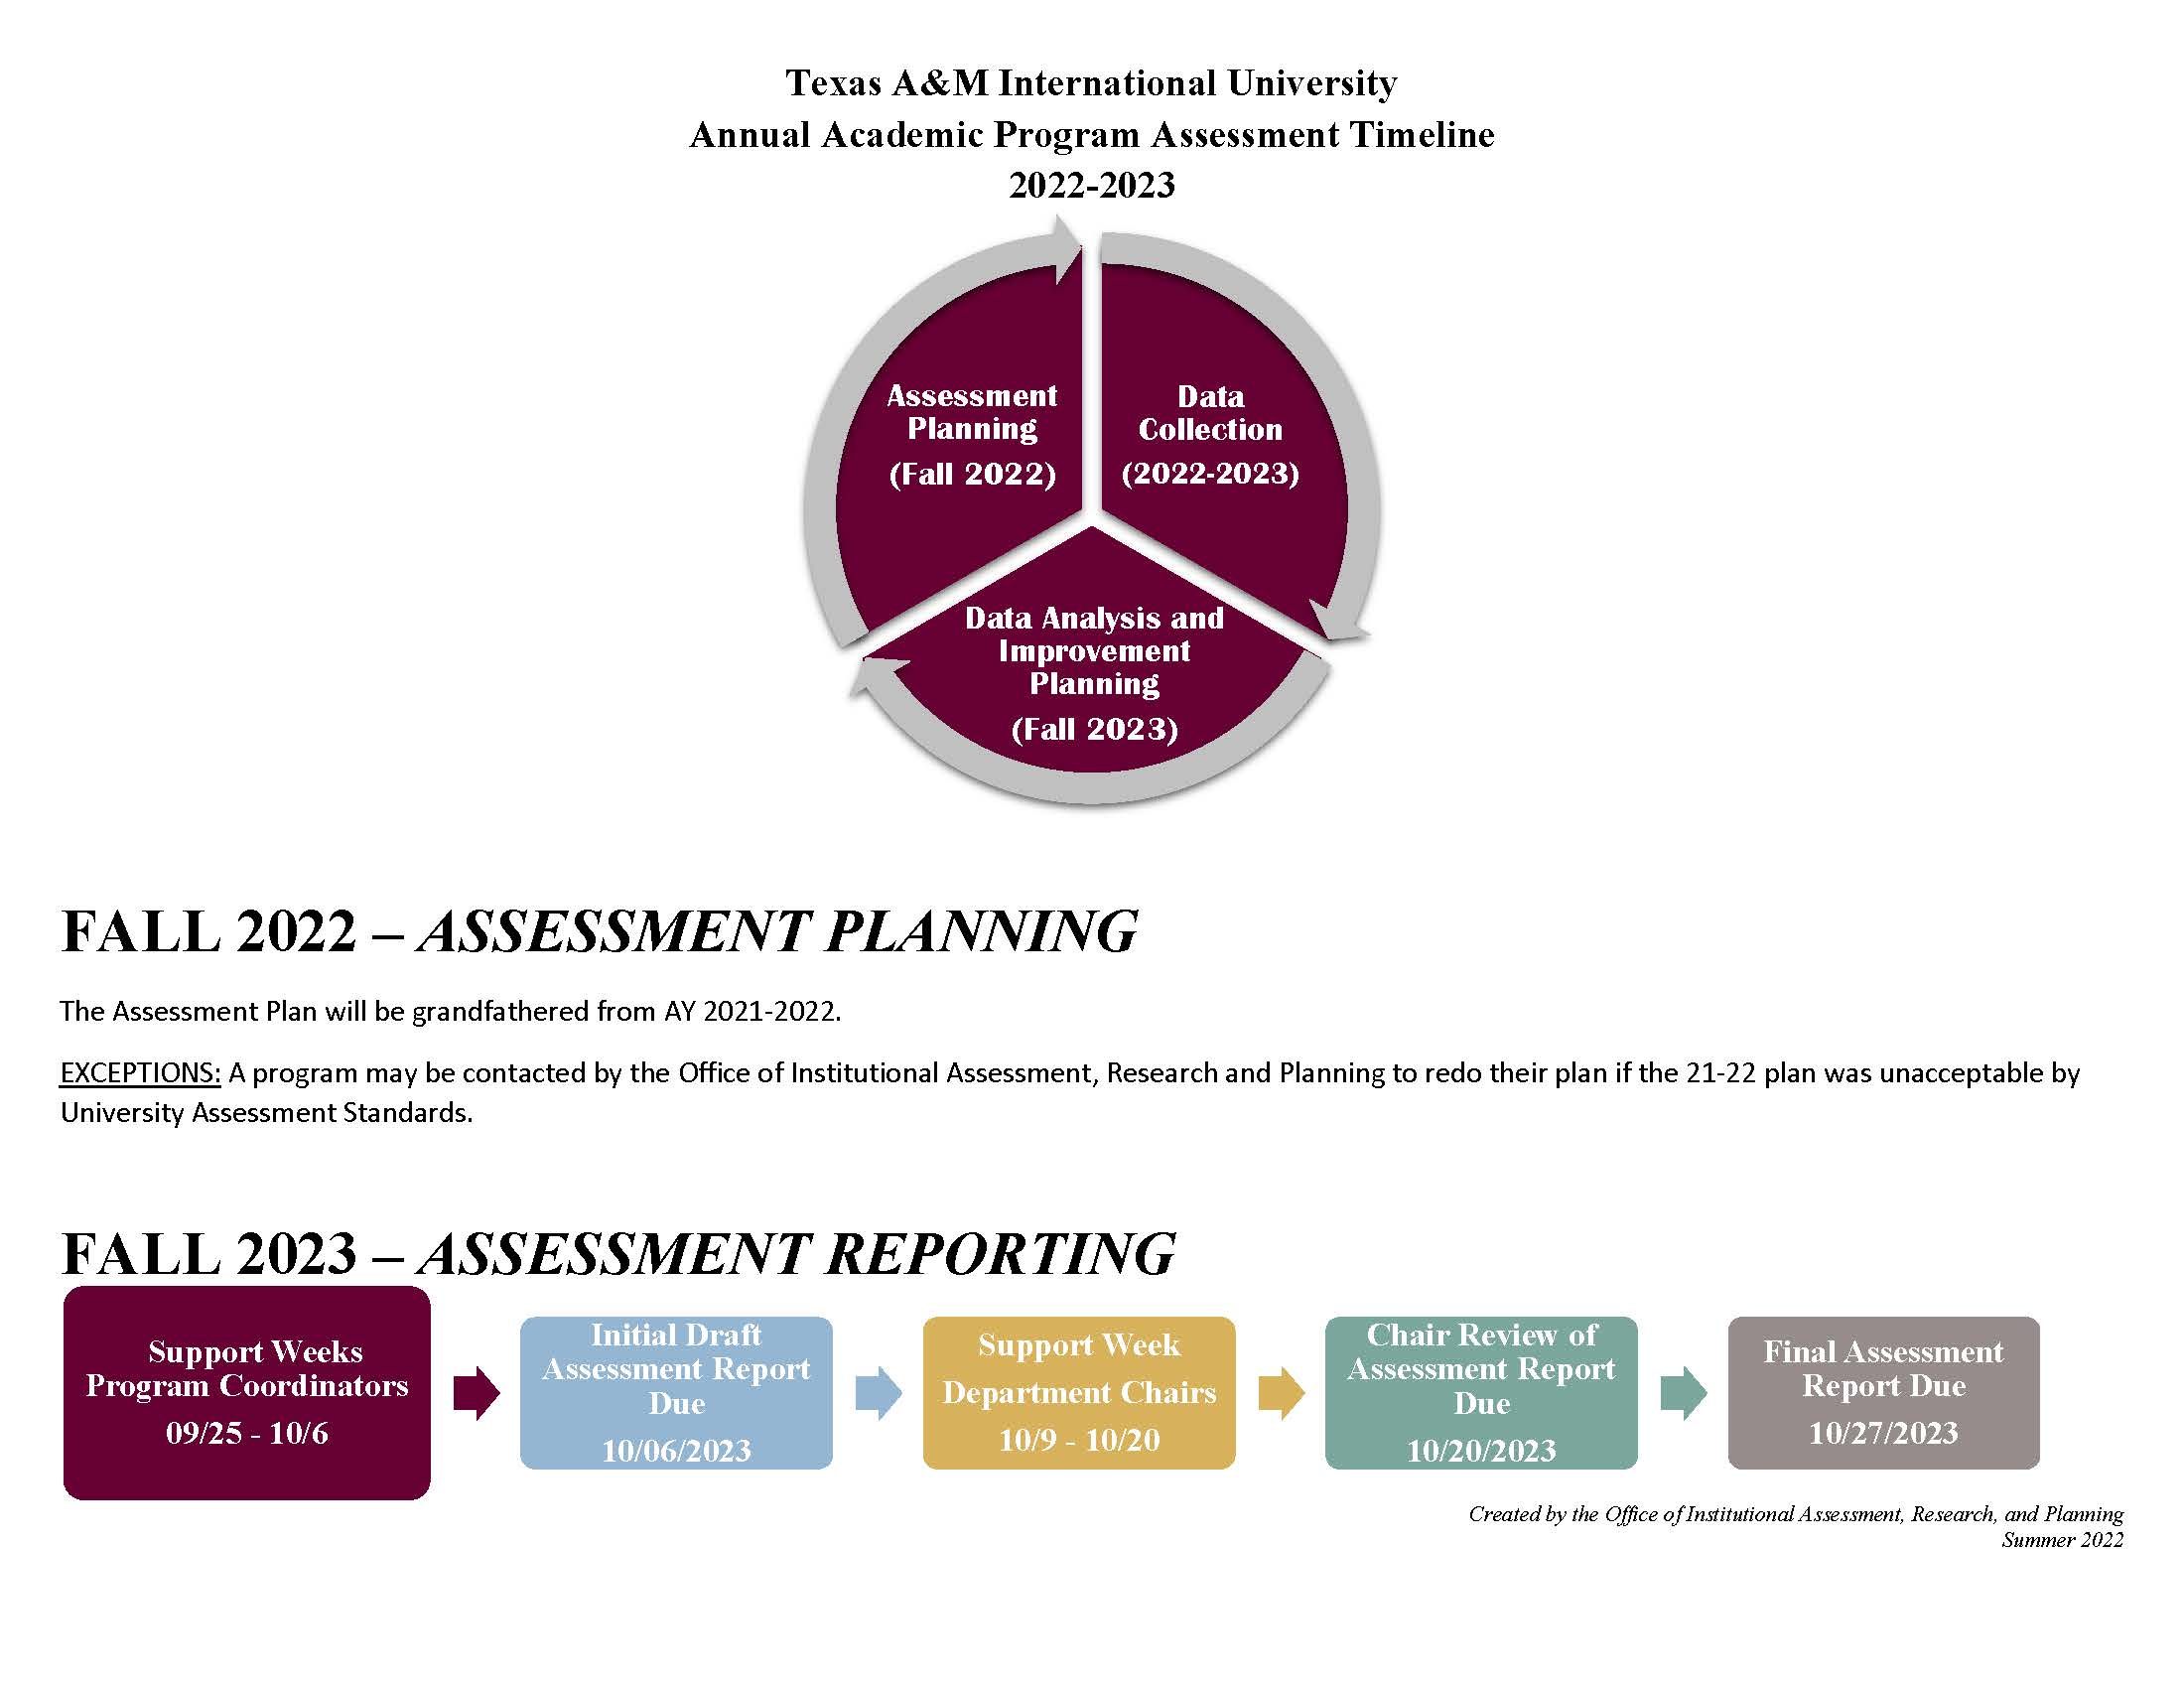 2022-2023 Assessment Timeline